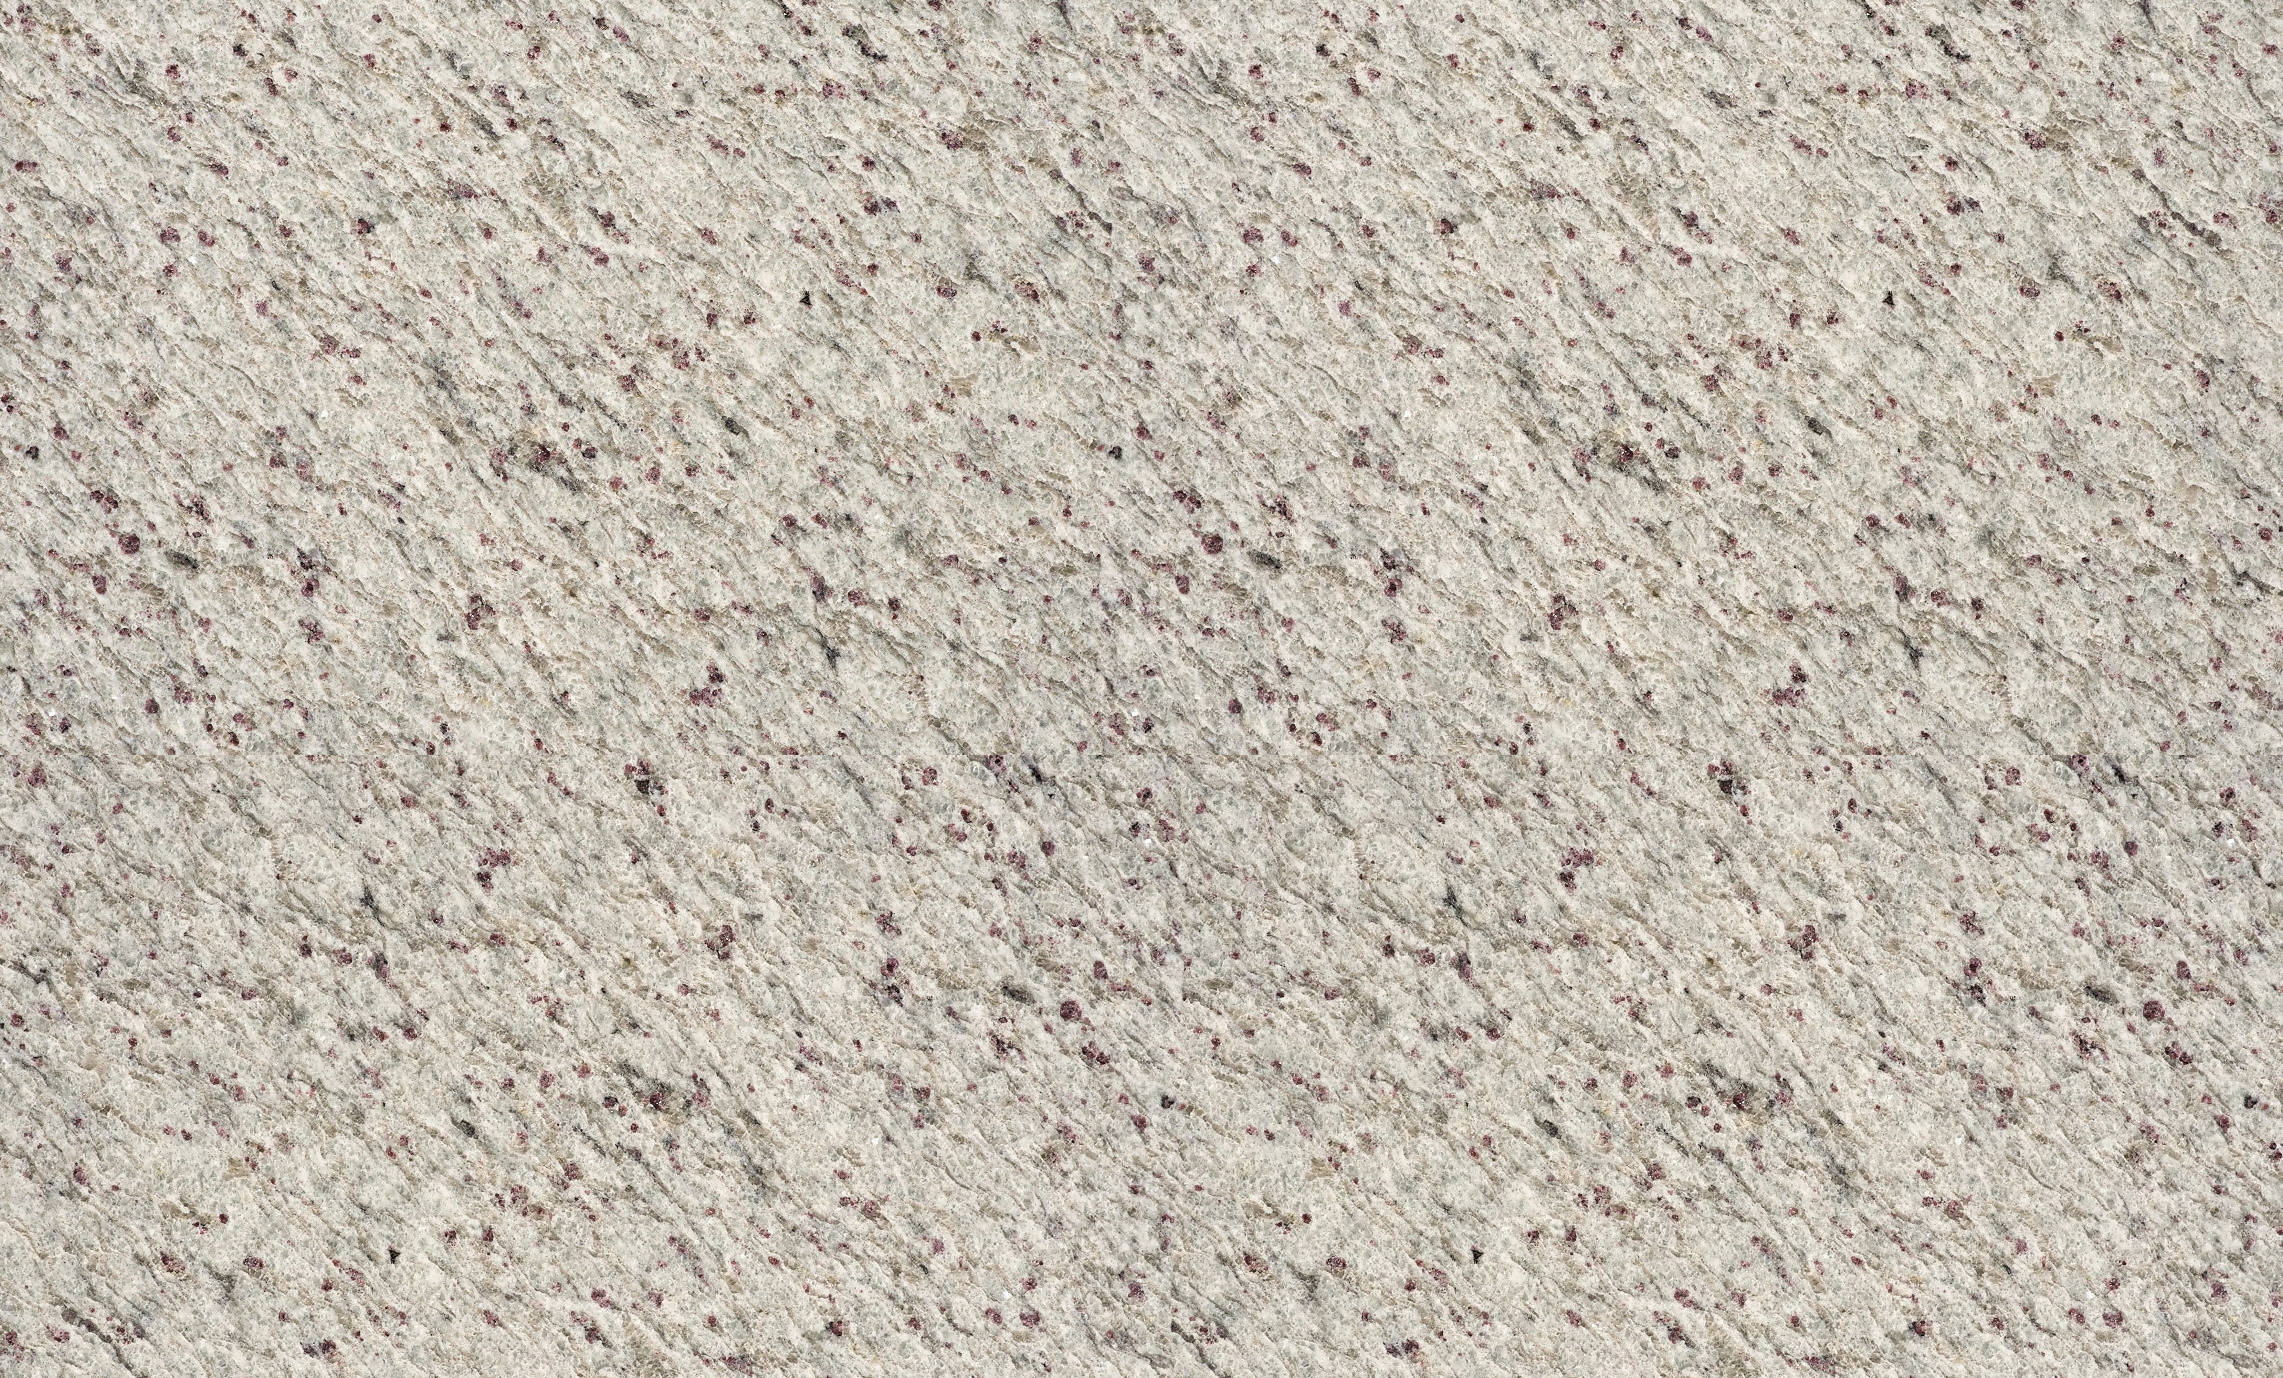 CHIDA WHITE GRANITE,Granite,Work-Tops,www.work-tops.com